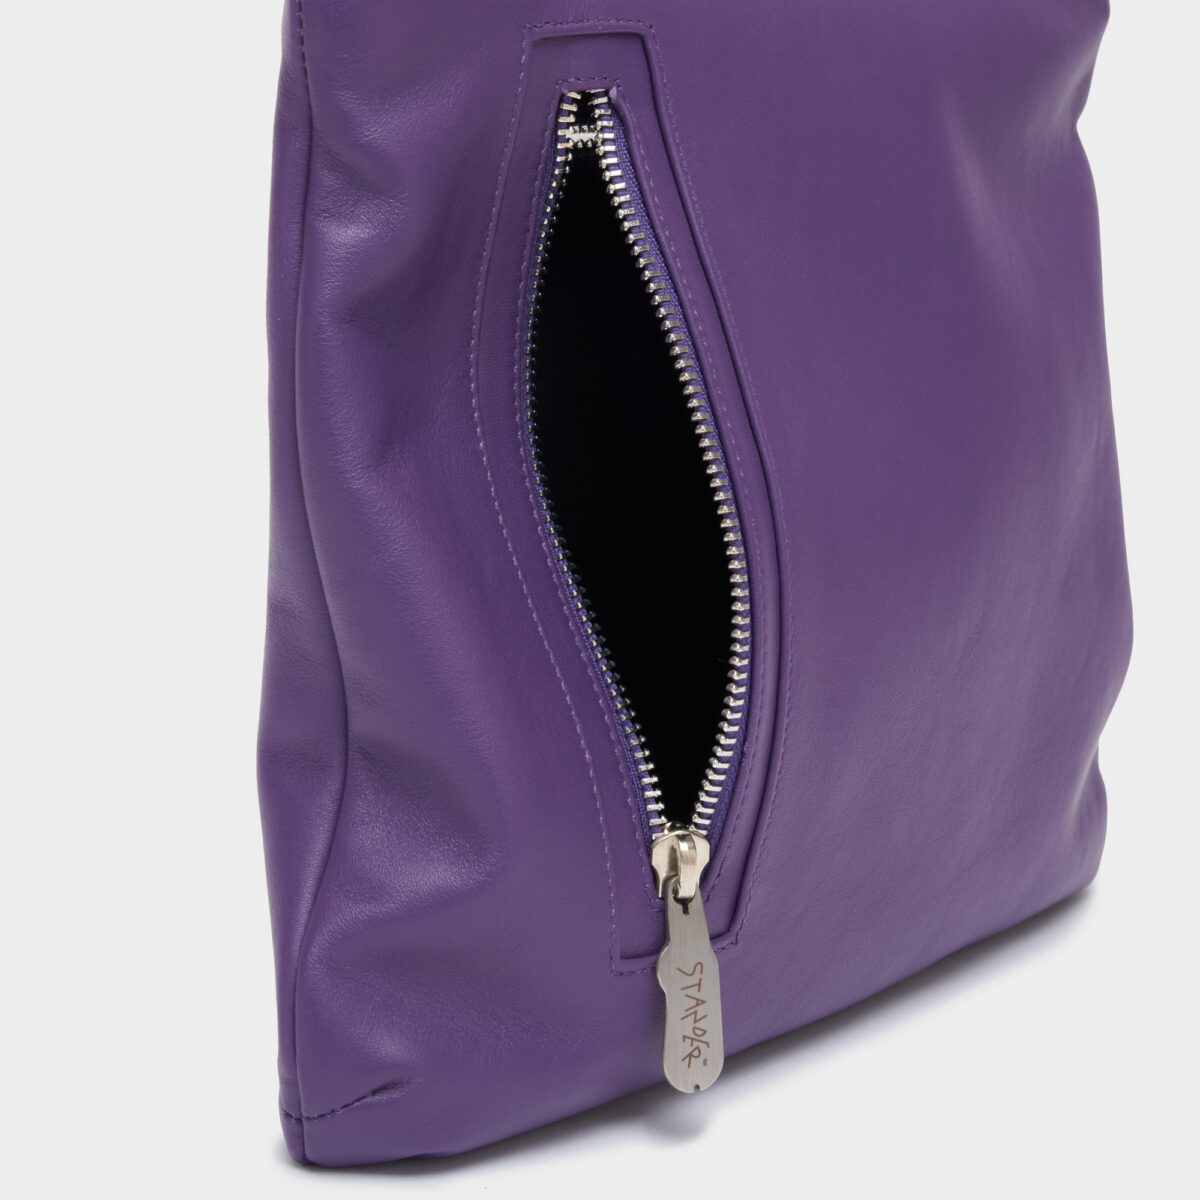 p13-leather-bag_stander-indossato1